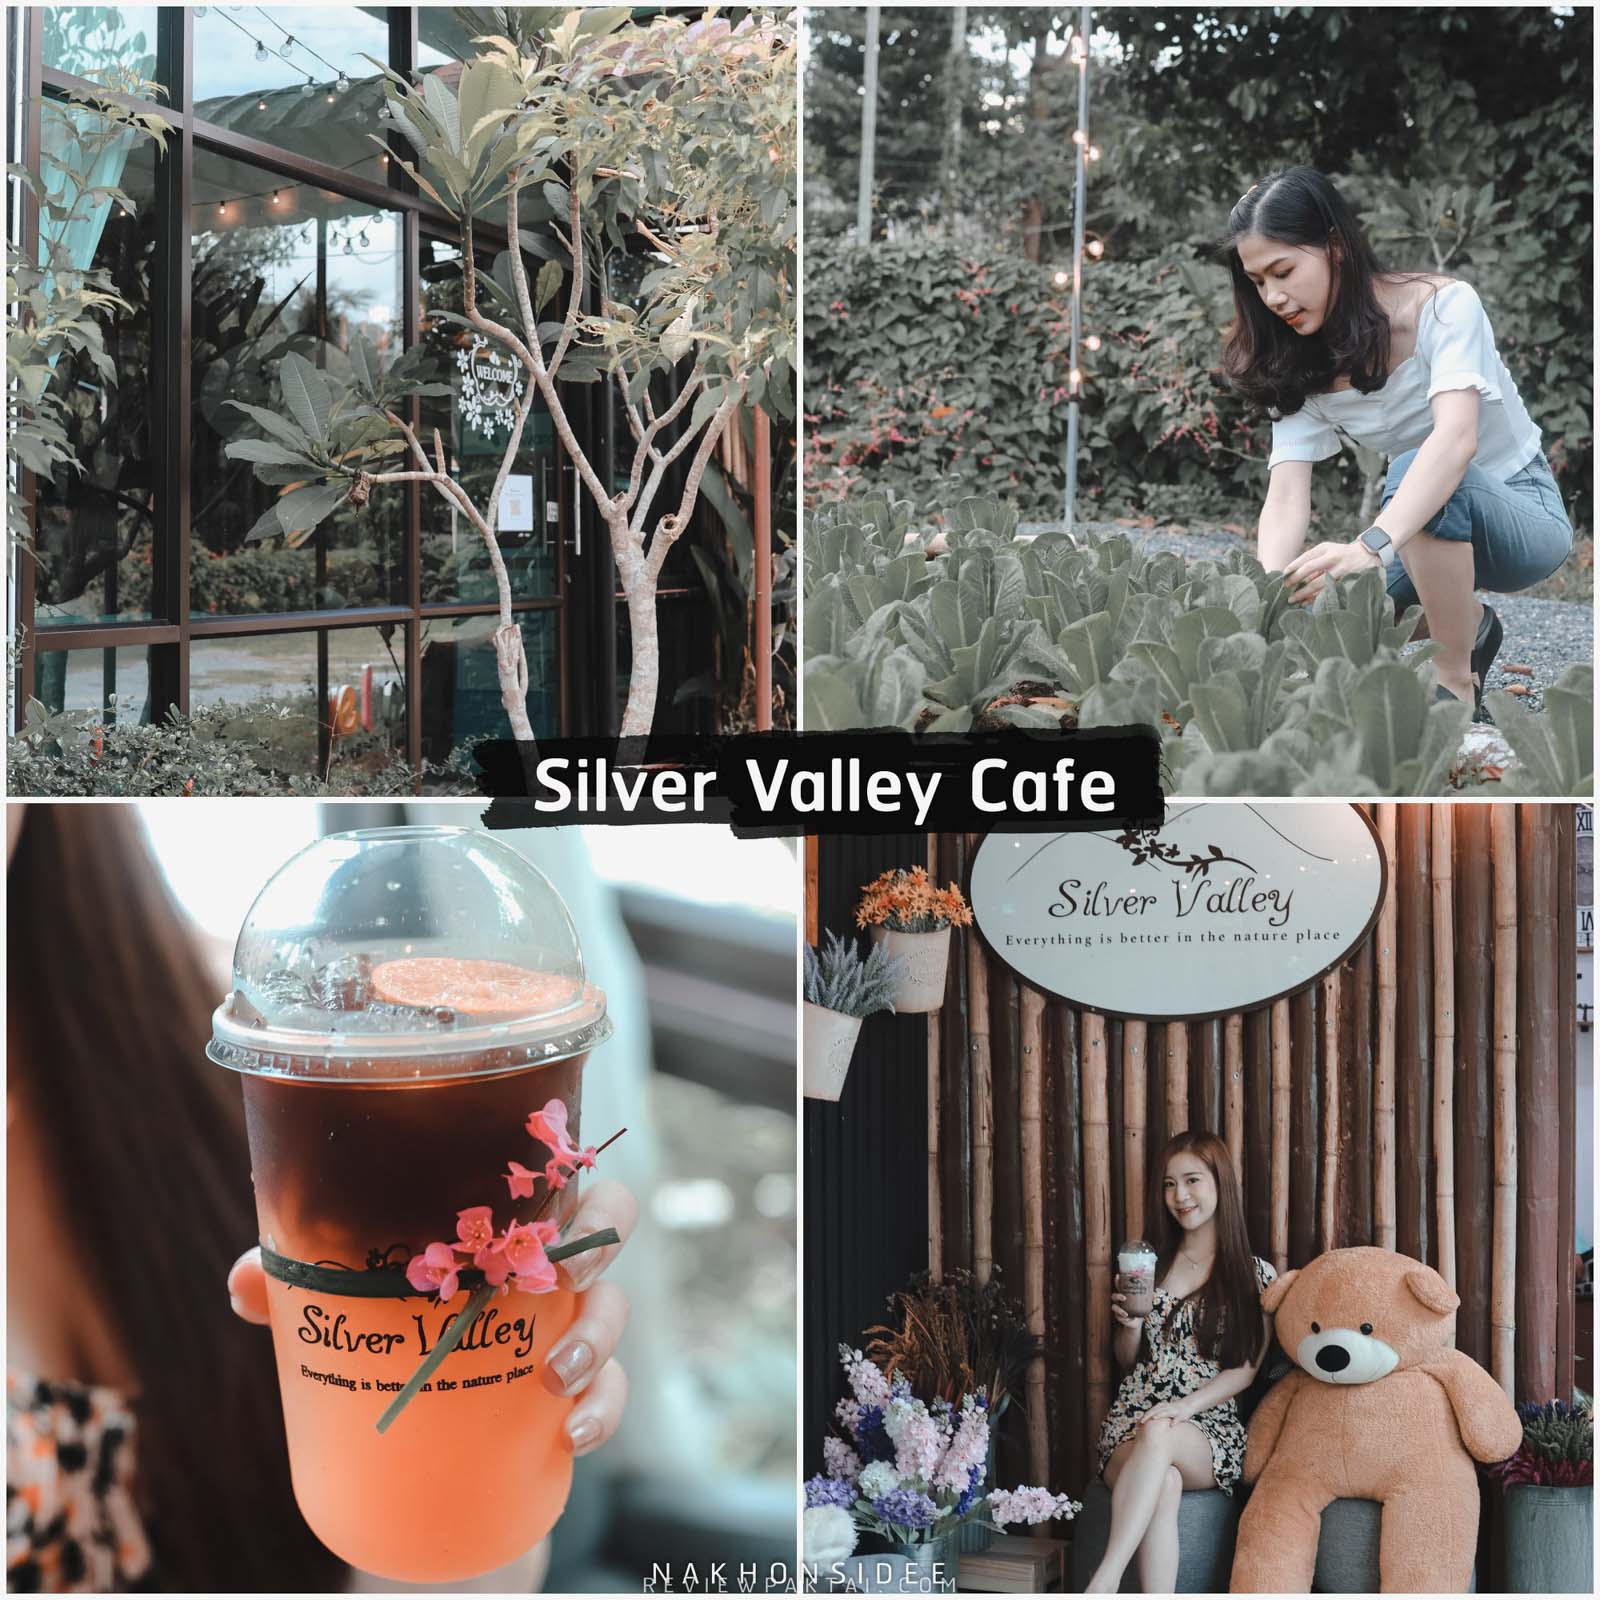 Silver-Valley-Cafe-ลานสกา -เป็นทั้งที่พักและคาเฟ่ชิวๆ-ริมลำธาร-บอกเลยว่าเด็ดต้องห้ามพลาด
 คาเฟ่,นครศรีธรรมราช,2021,จุดกิน,ของกิน,วิวหลักล้าน,ร้านกาแฟ